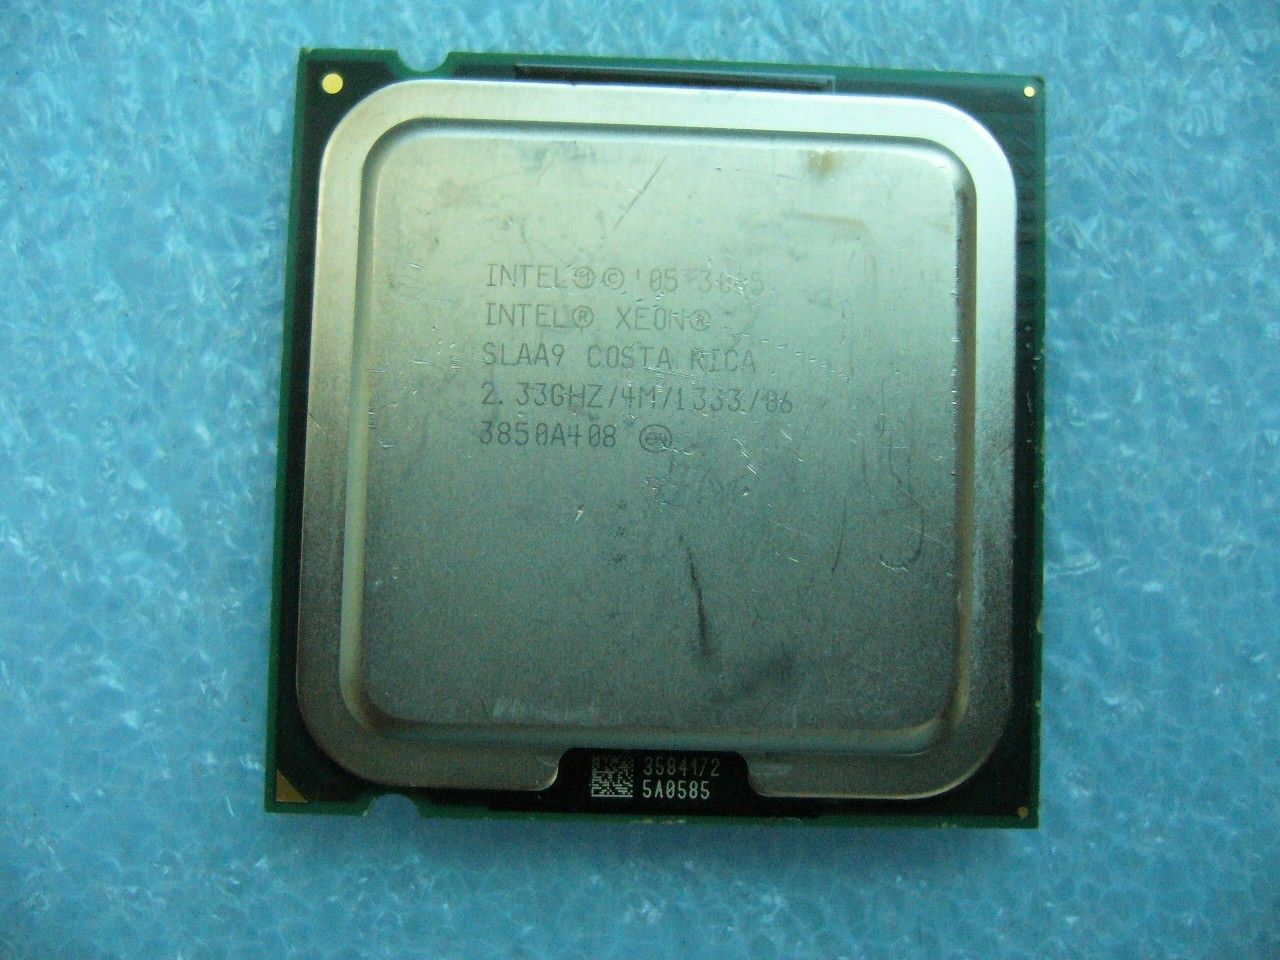 QTY 1x INTEL Dual Cores Xeon 3065 CPU 2.33GHz 4MB/1333Mhz LGA775 SLAA9